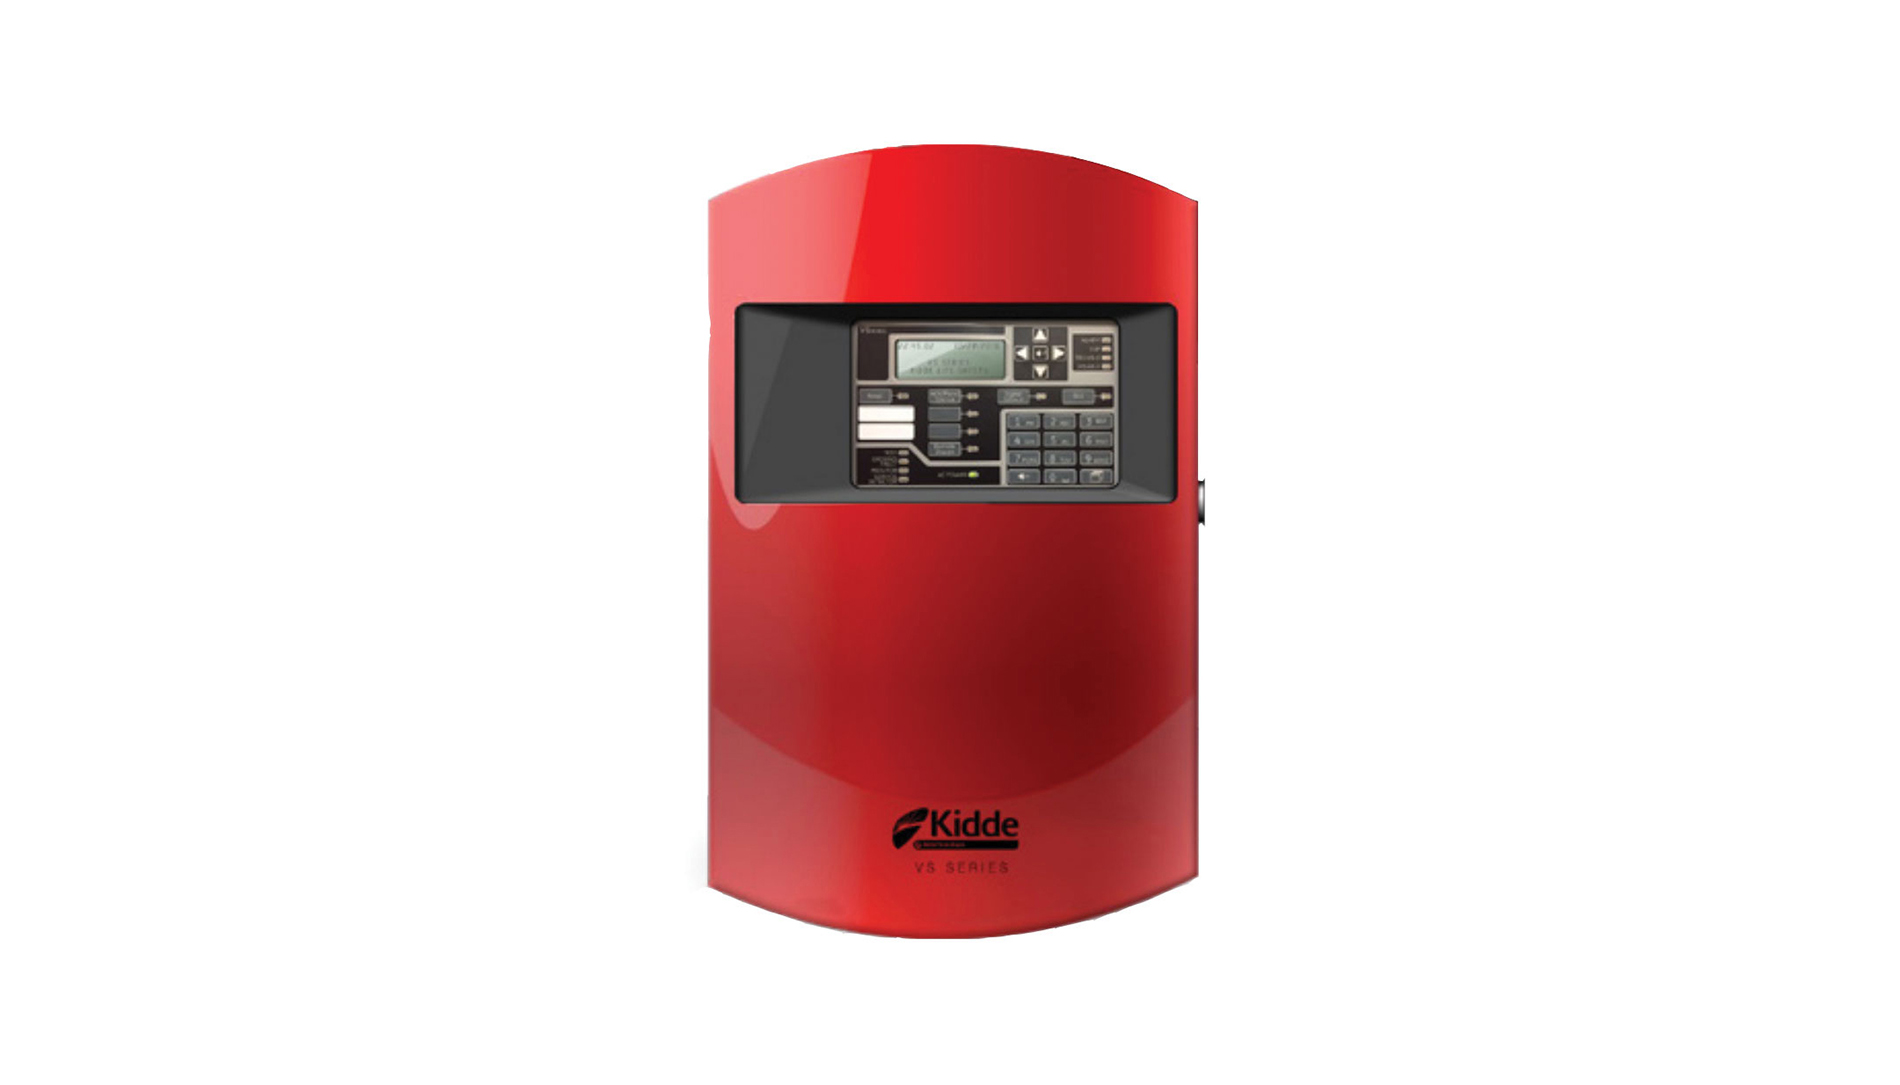 Kidde's VS Intelligent Fire Alarm Control Panel